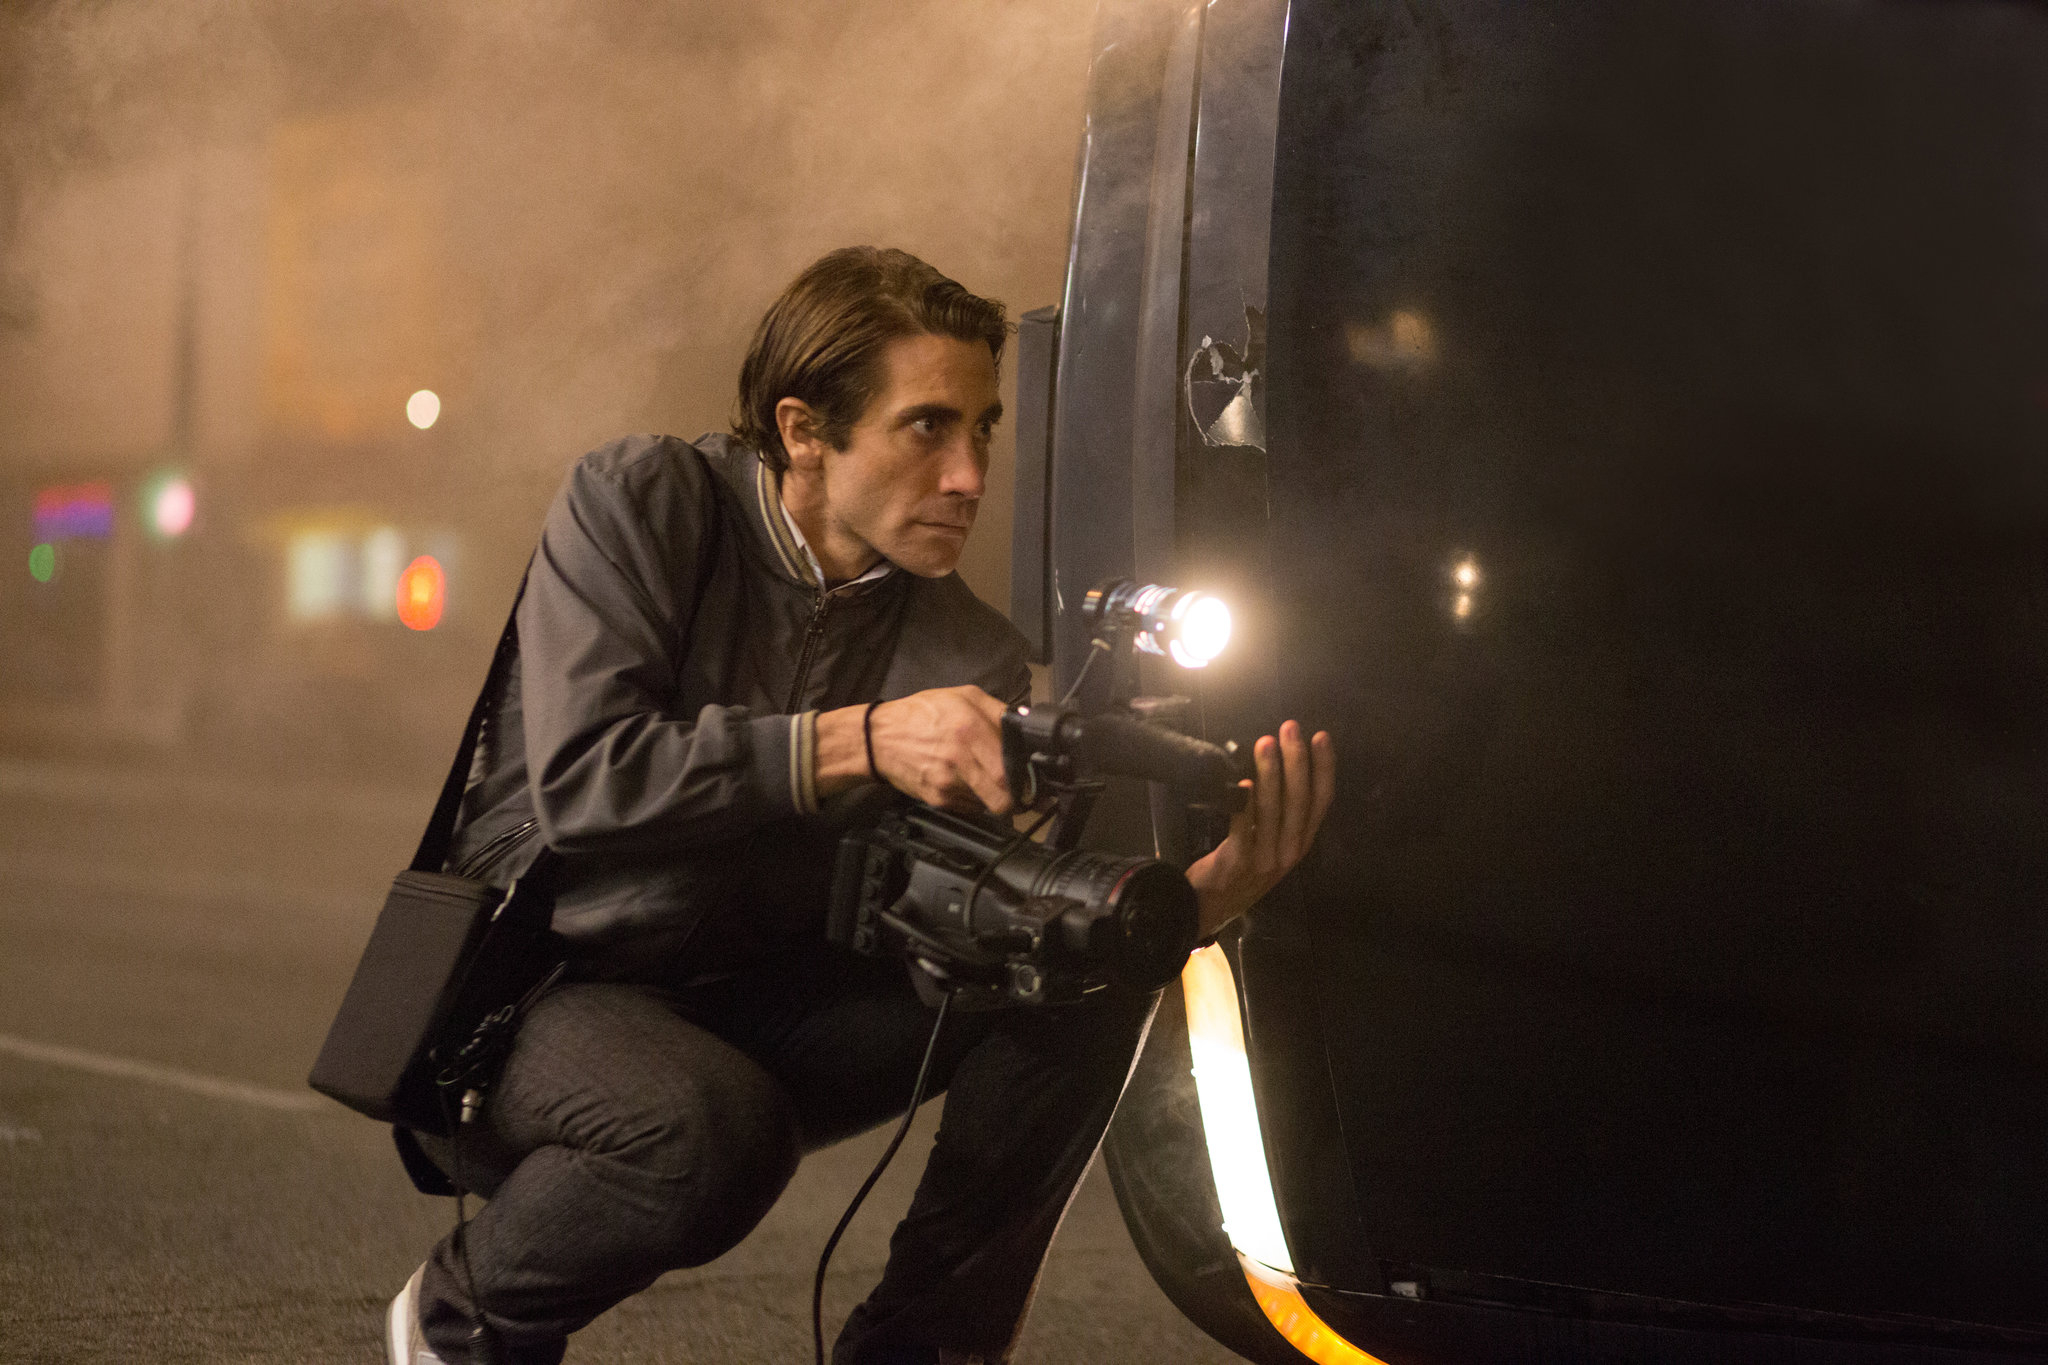 2048x1365 Nightcrawler' Stars Jake Gyllenhaal as an Obsessive The New York Times